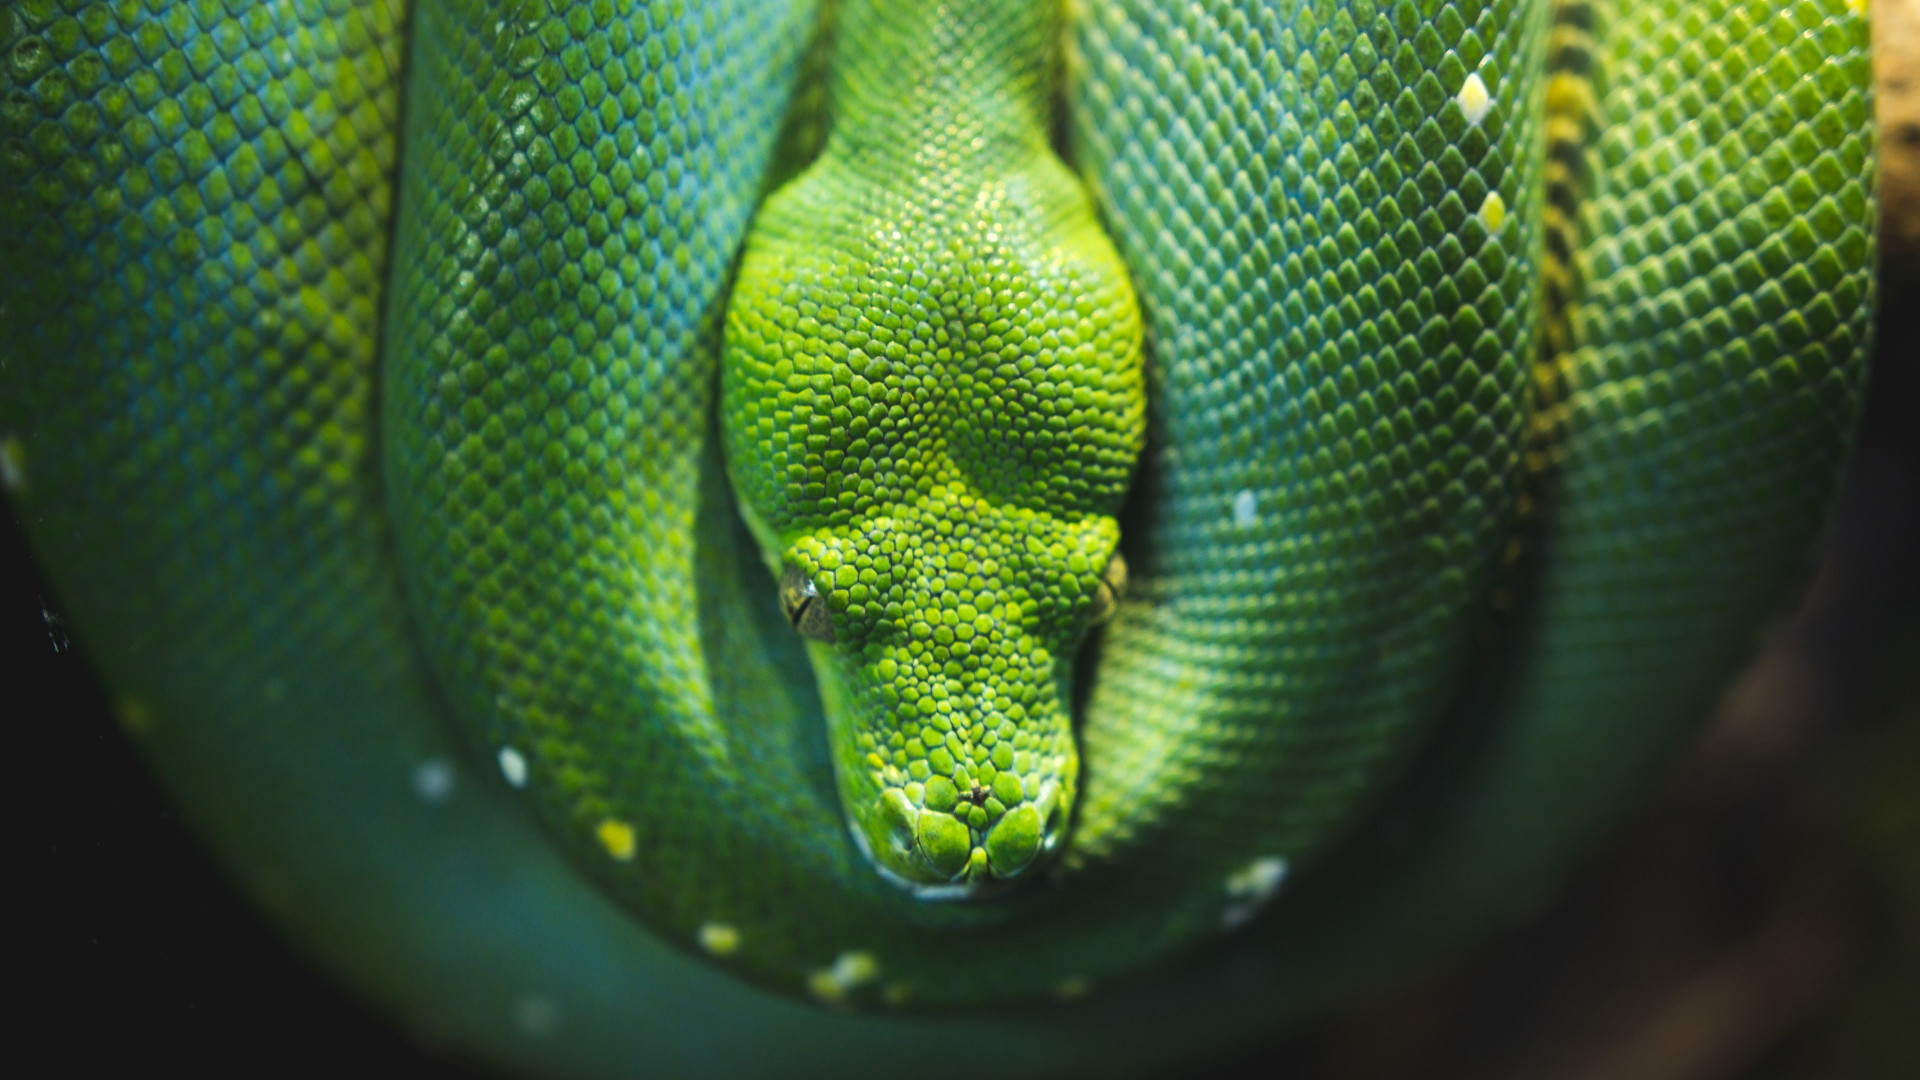 Download wallpaper: Green Tree snake python 1920x1080